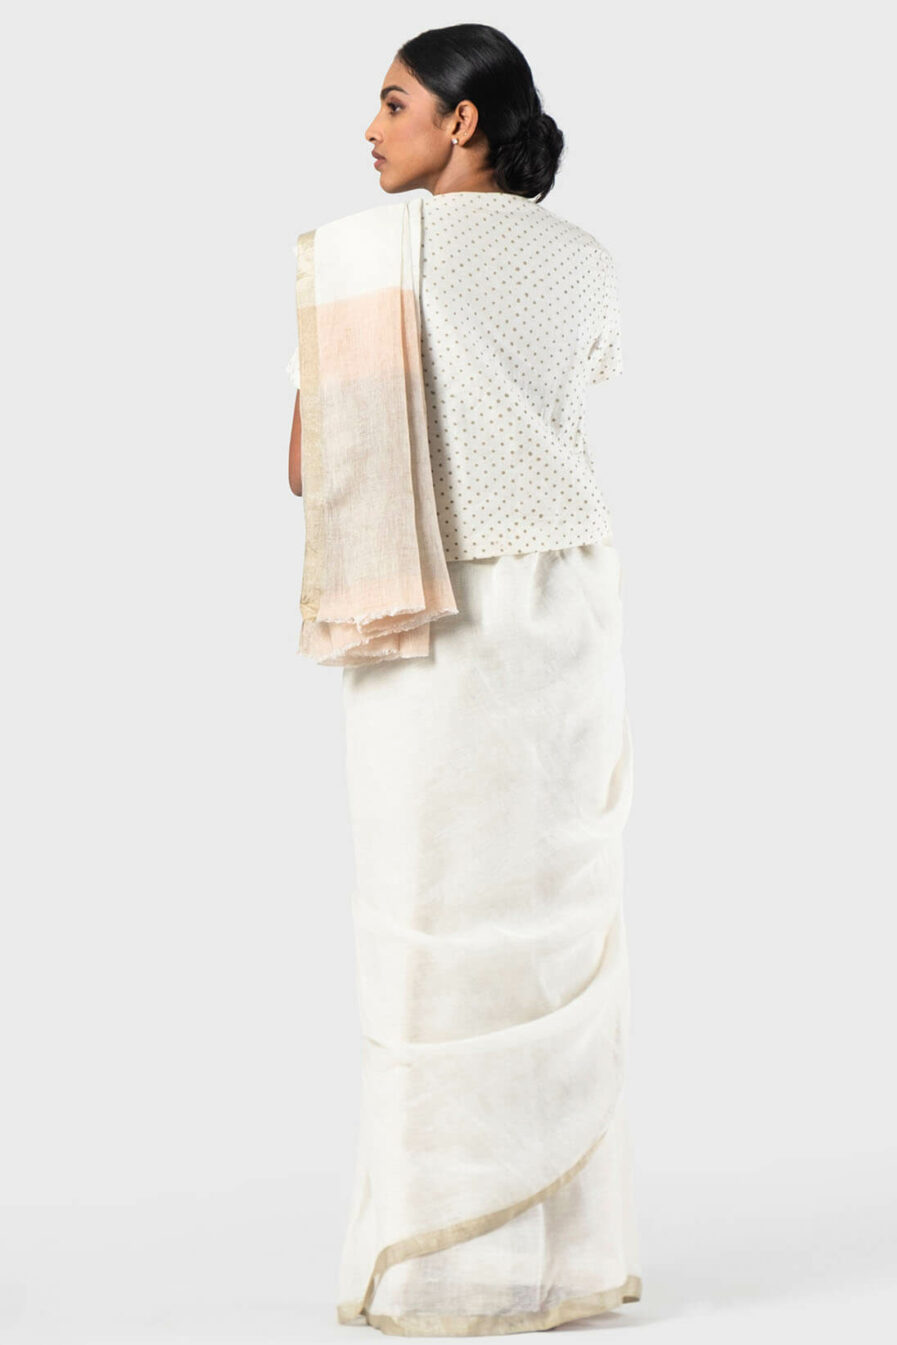 Anavila Ivory basic zari white sari